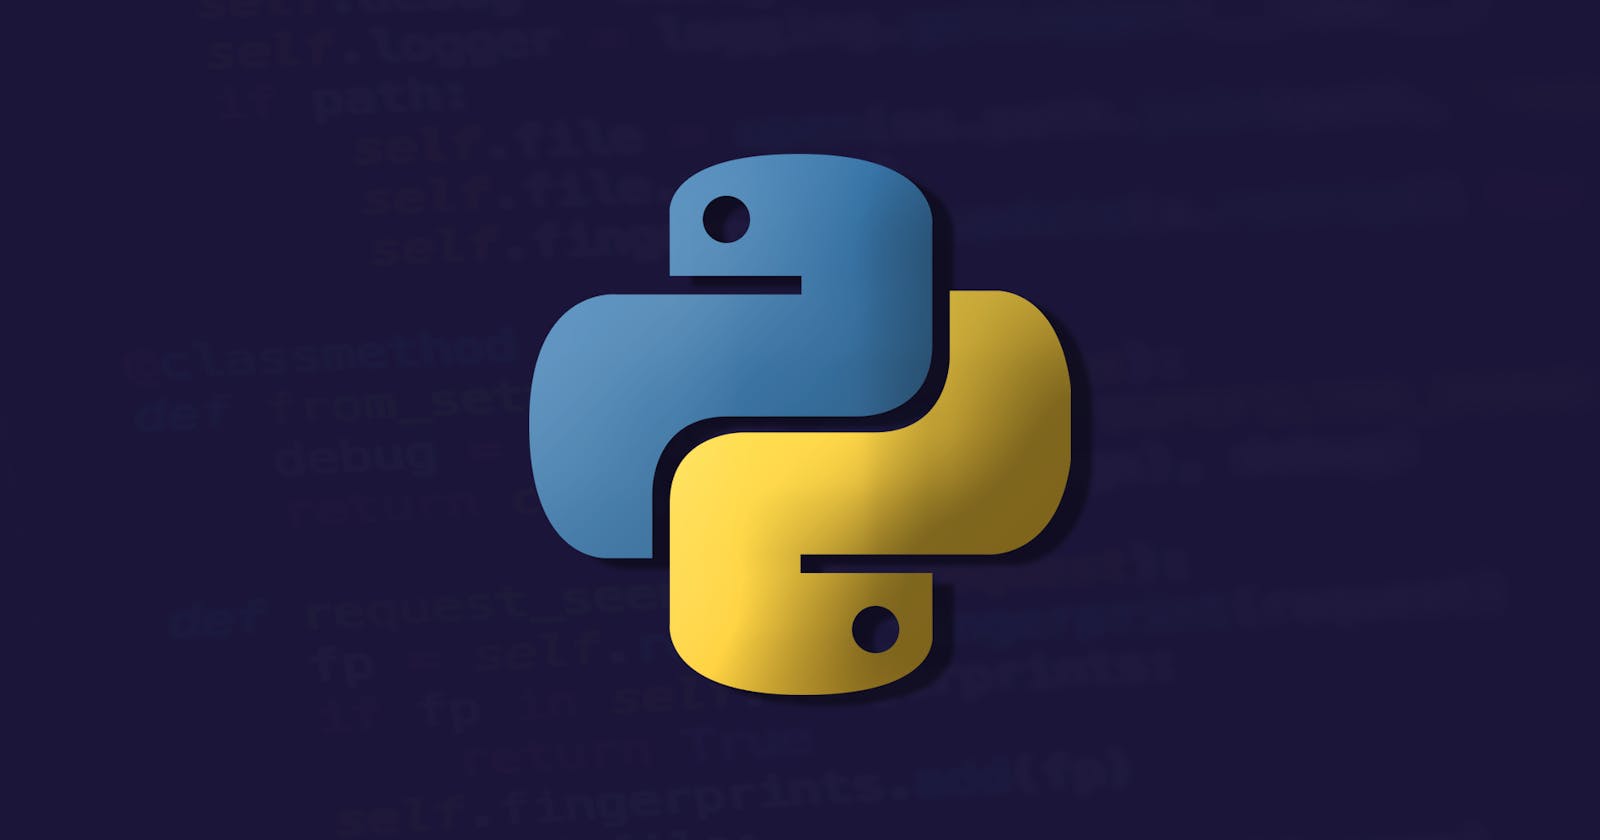 Python: The Programming Language of the Future (Insight Into Python's History)